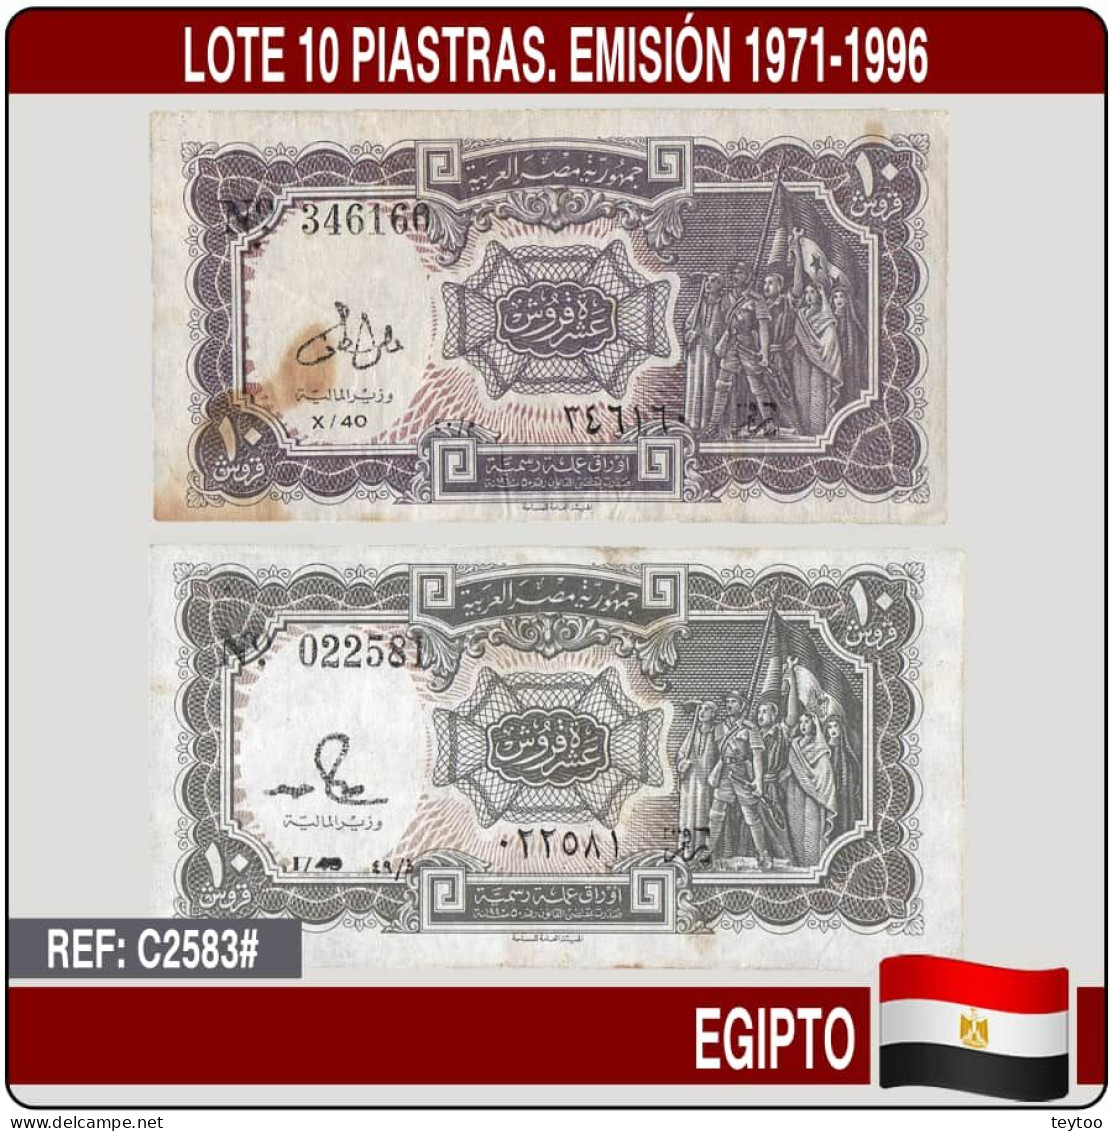 C2583# Egipto. Lote 10 Piastras. Emisión 1971-1996 (BC) - Egipto